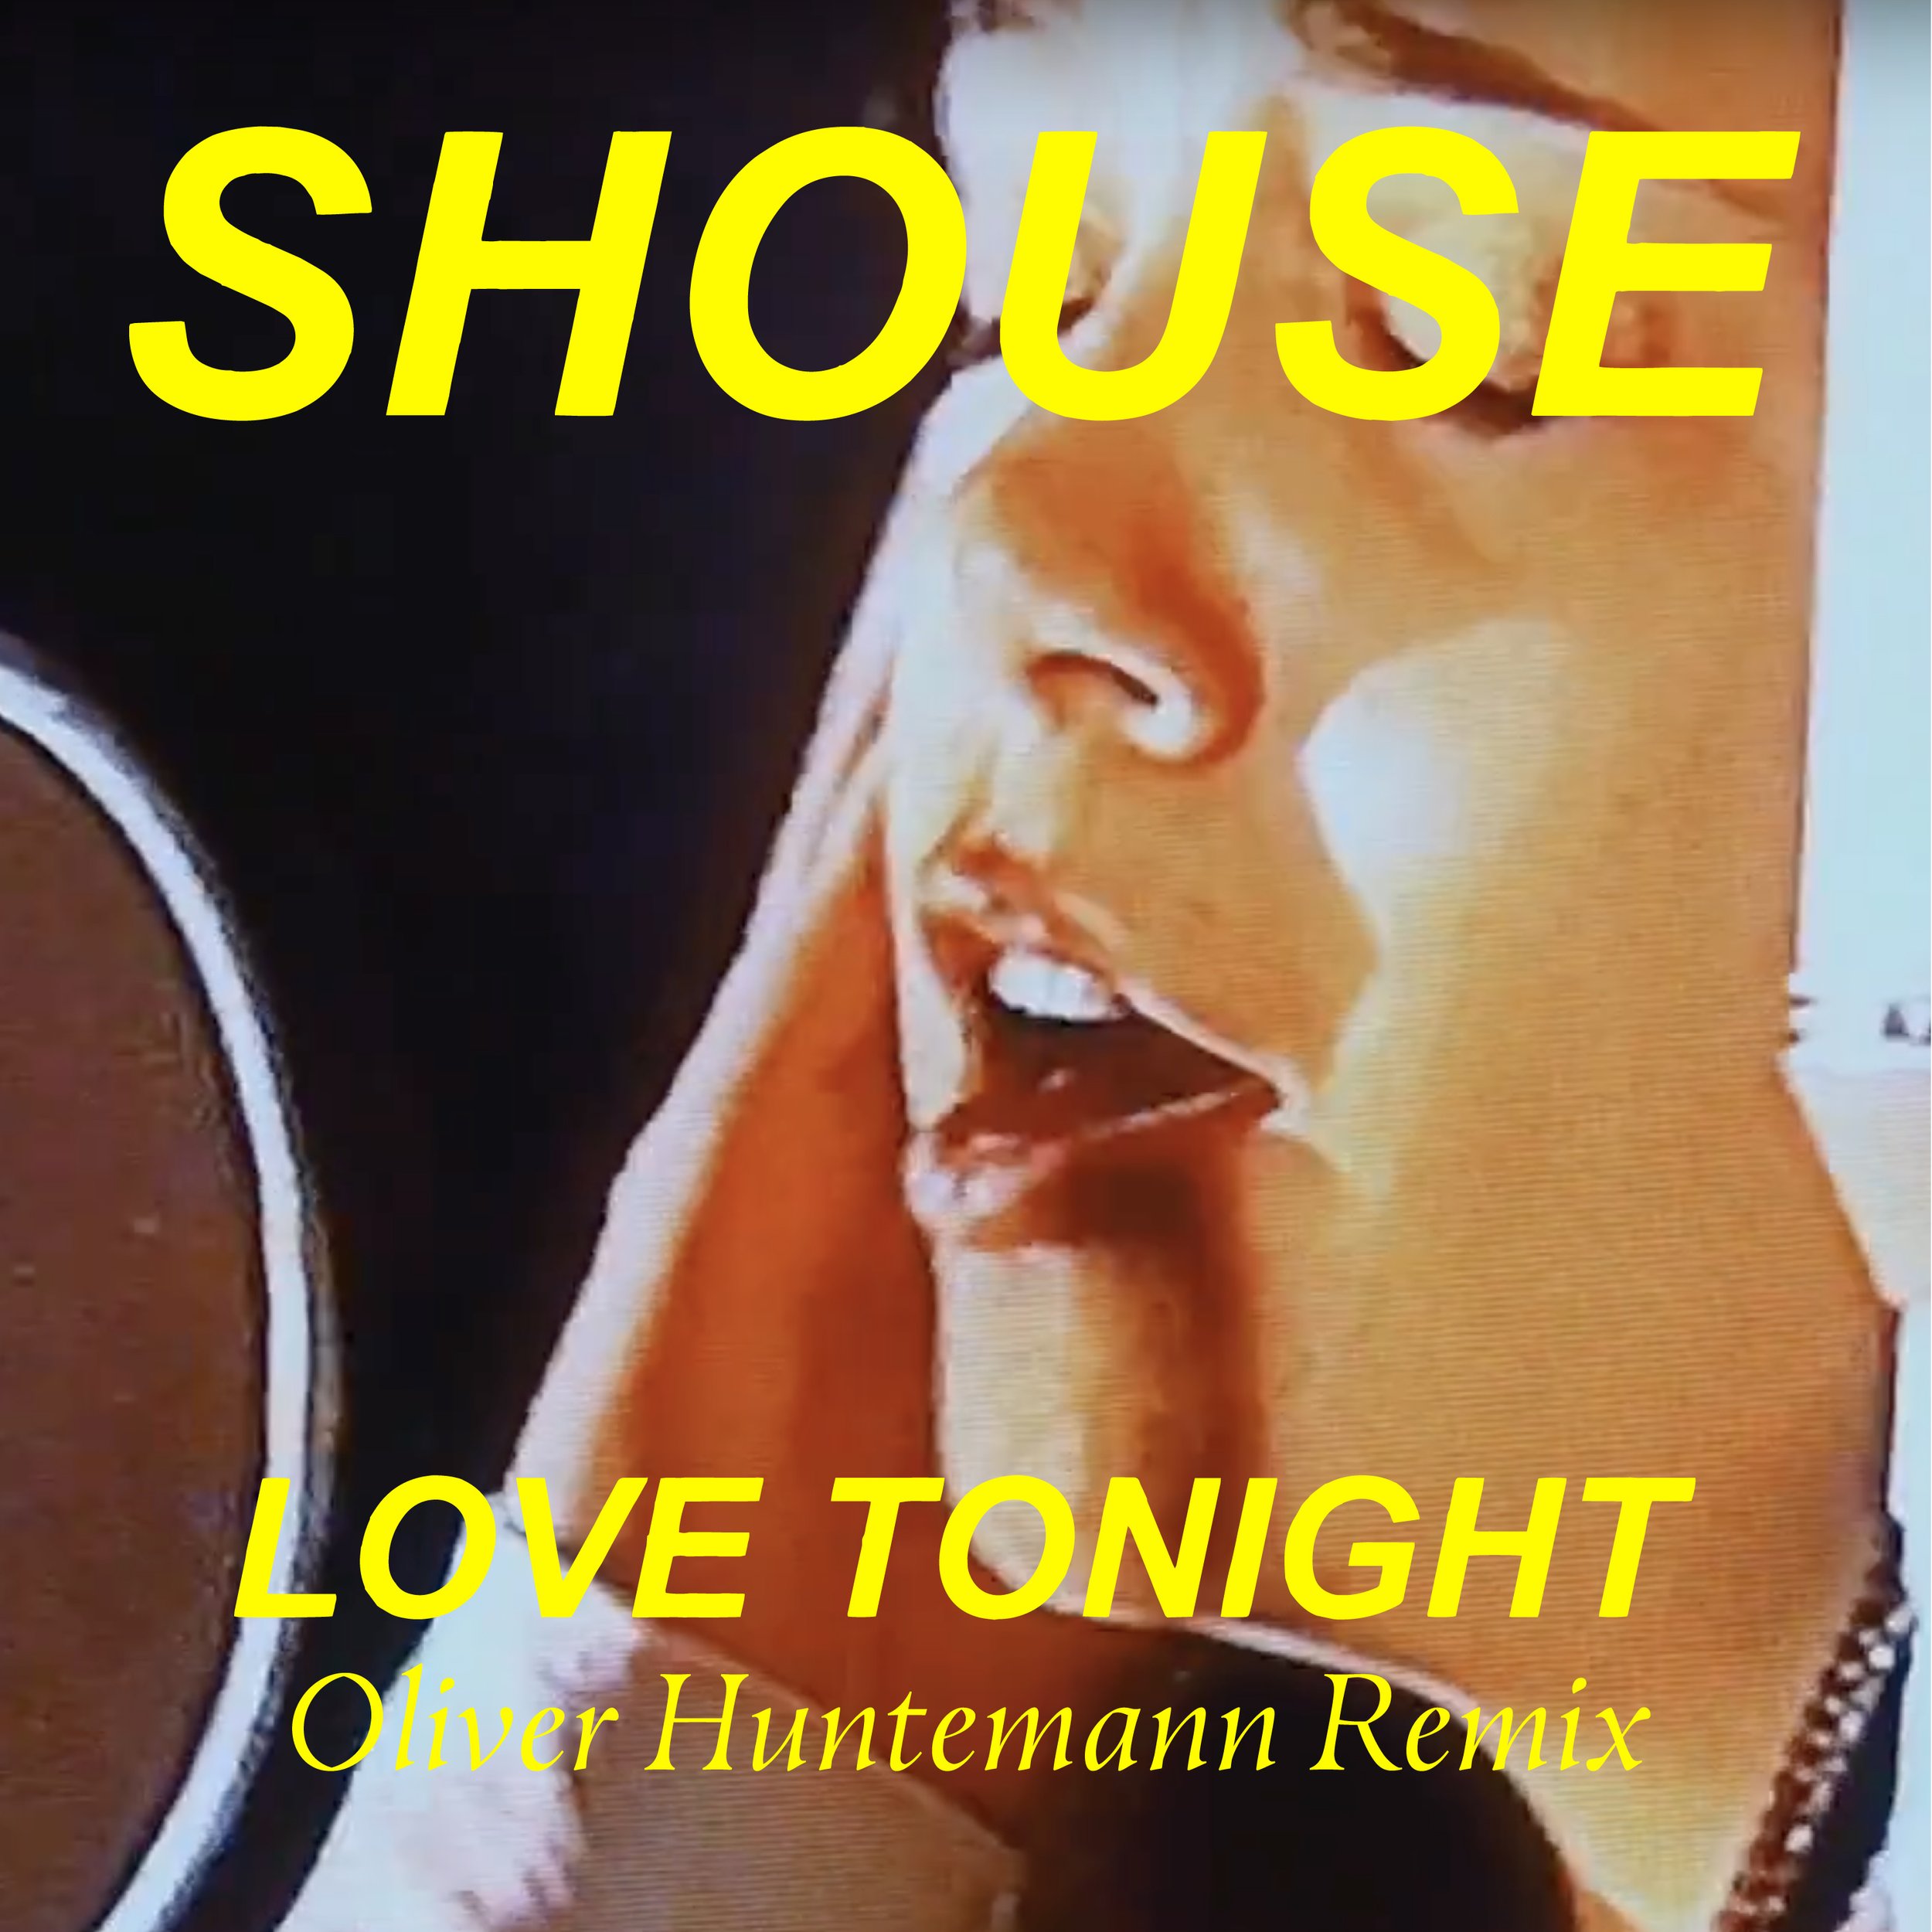 Shouse---Love-Tonight---Oliver-Huntemann-Remix-ARTWORK.jpg